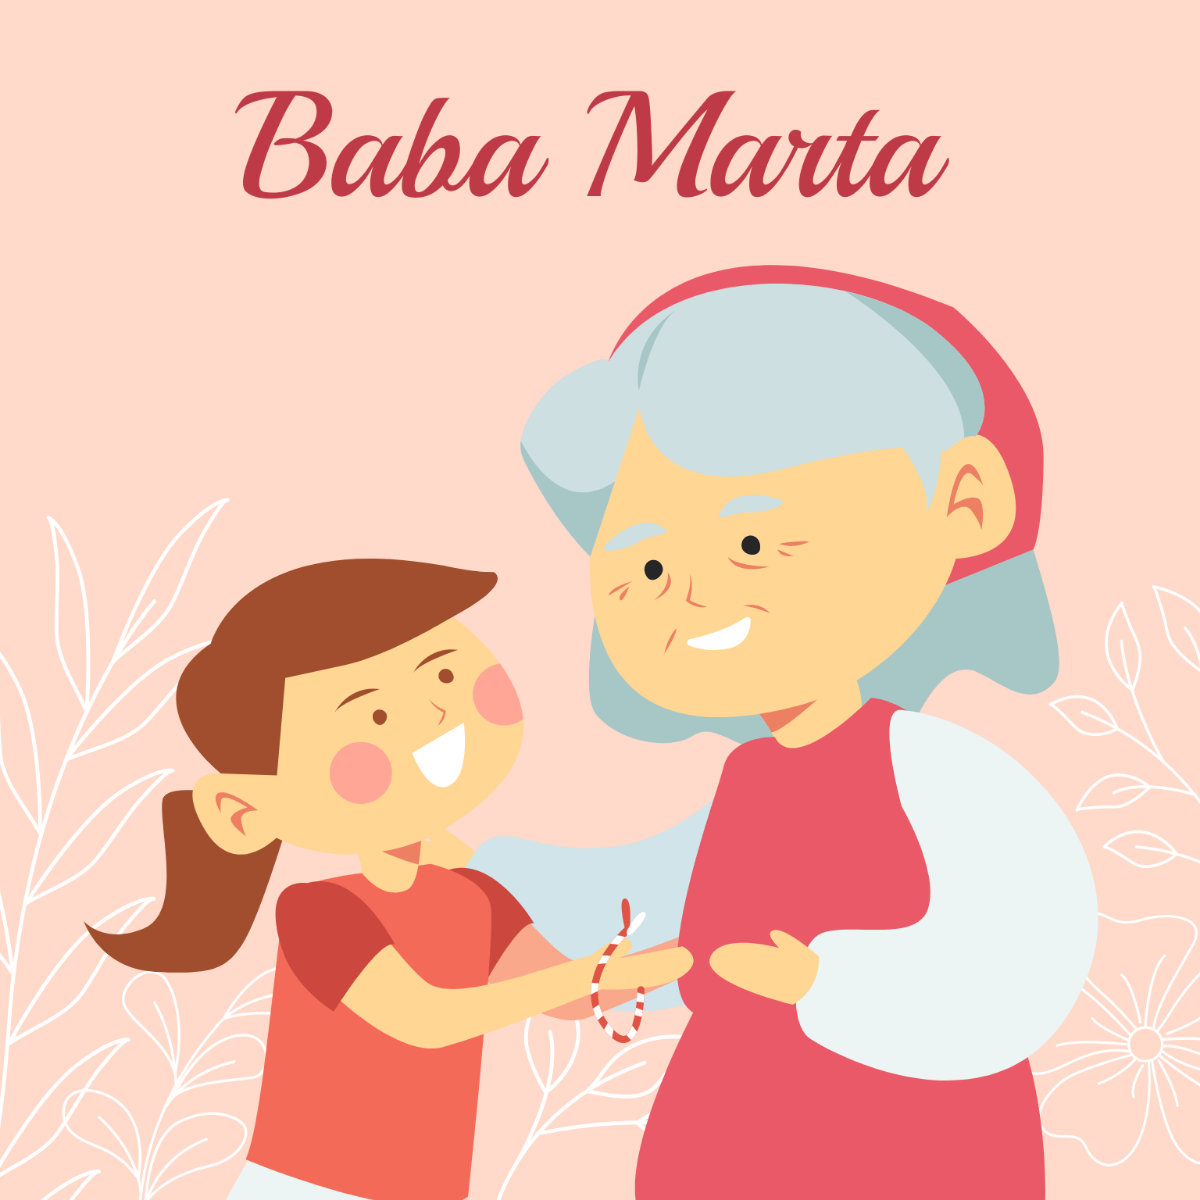 Baba Marta Illustration